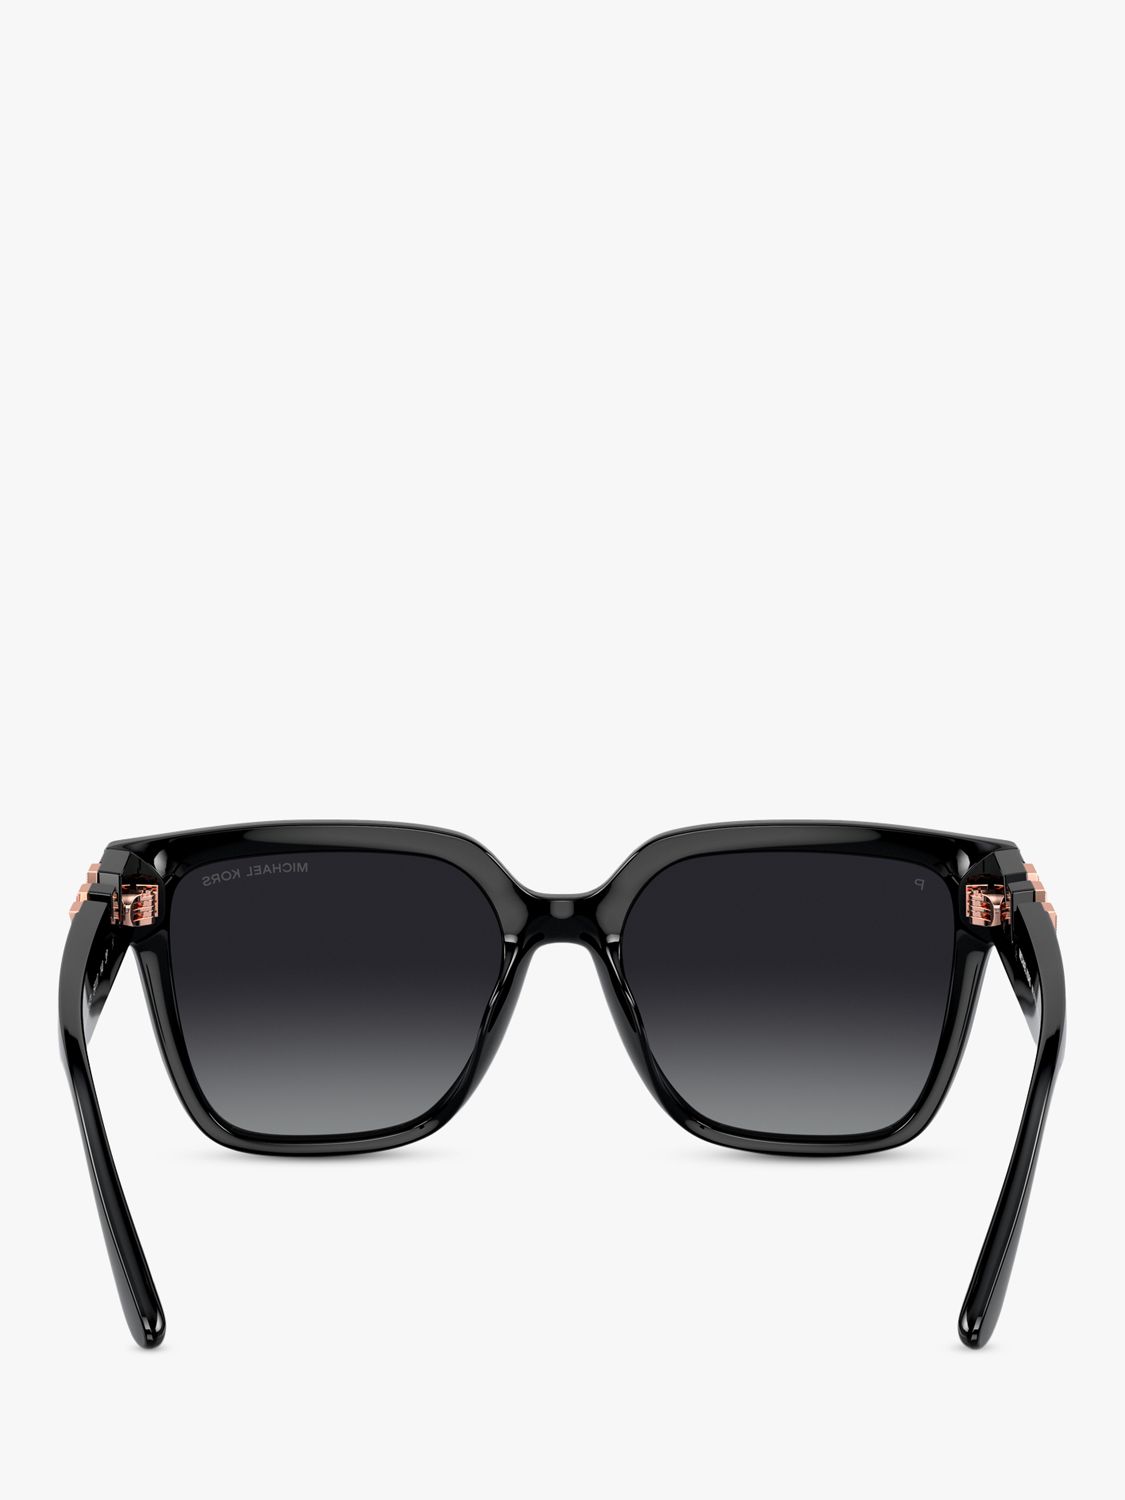 Michael Kors MK2170U Women's Karlie Pillow Sunglasses, Black/Grey Gradient